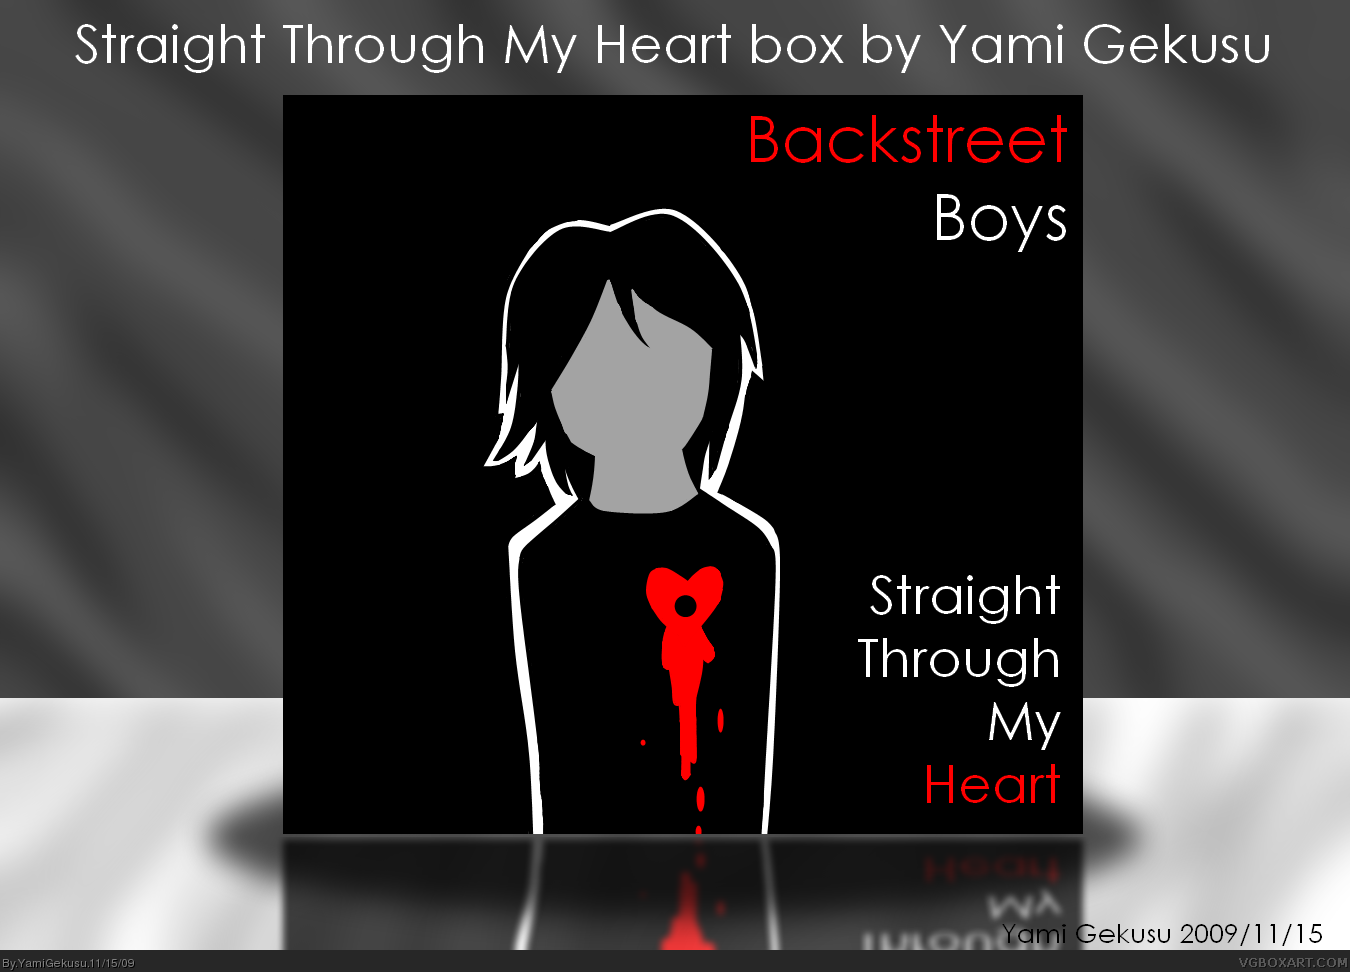 Backstreet Boys- Straight Through My Heart box cover